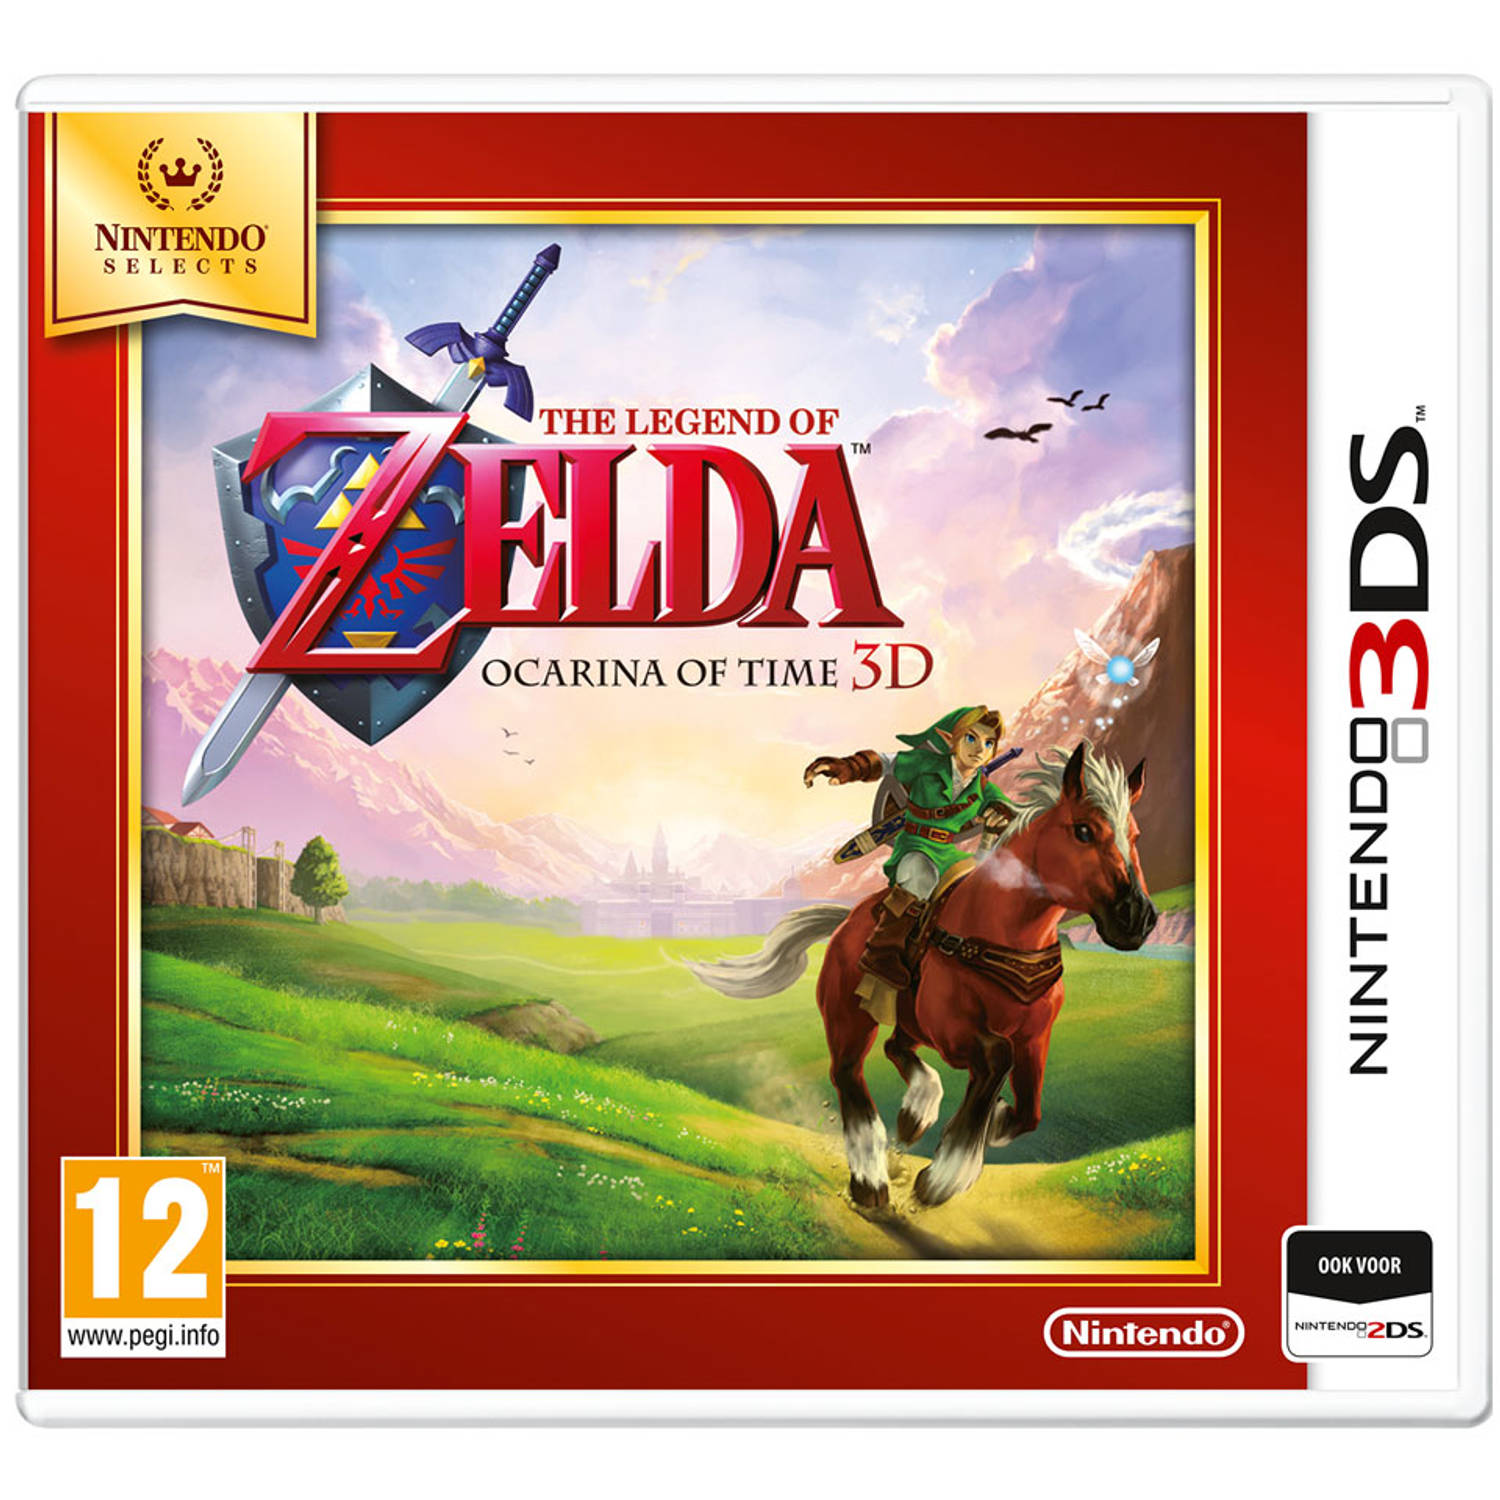 Nintendo The Legend of Zelda Ocarina of time 3D